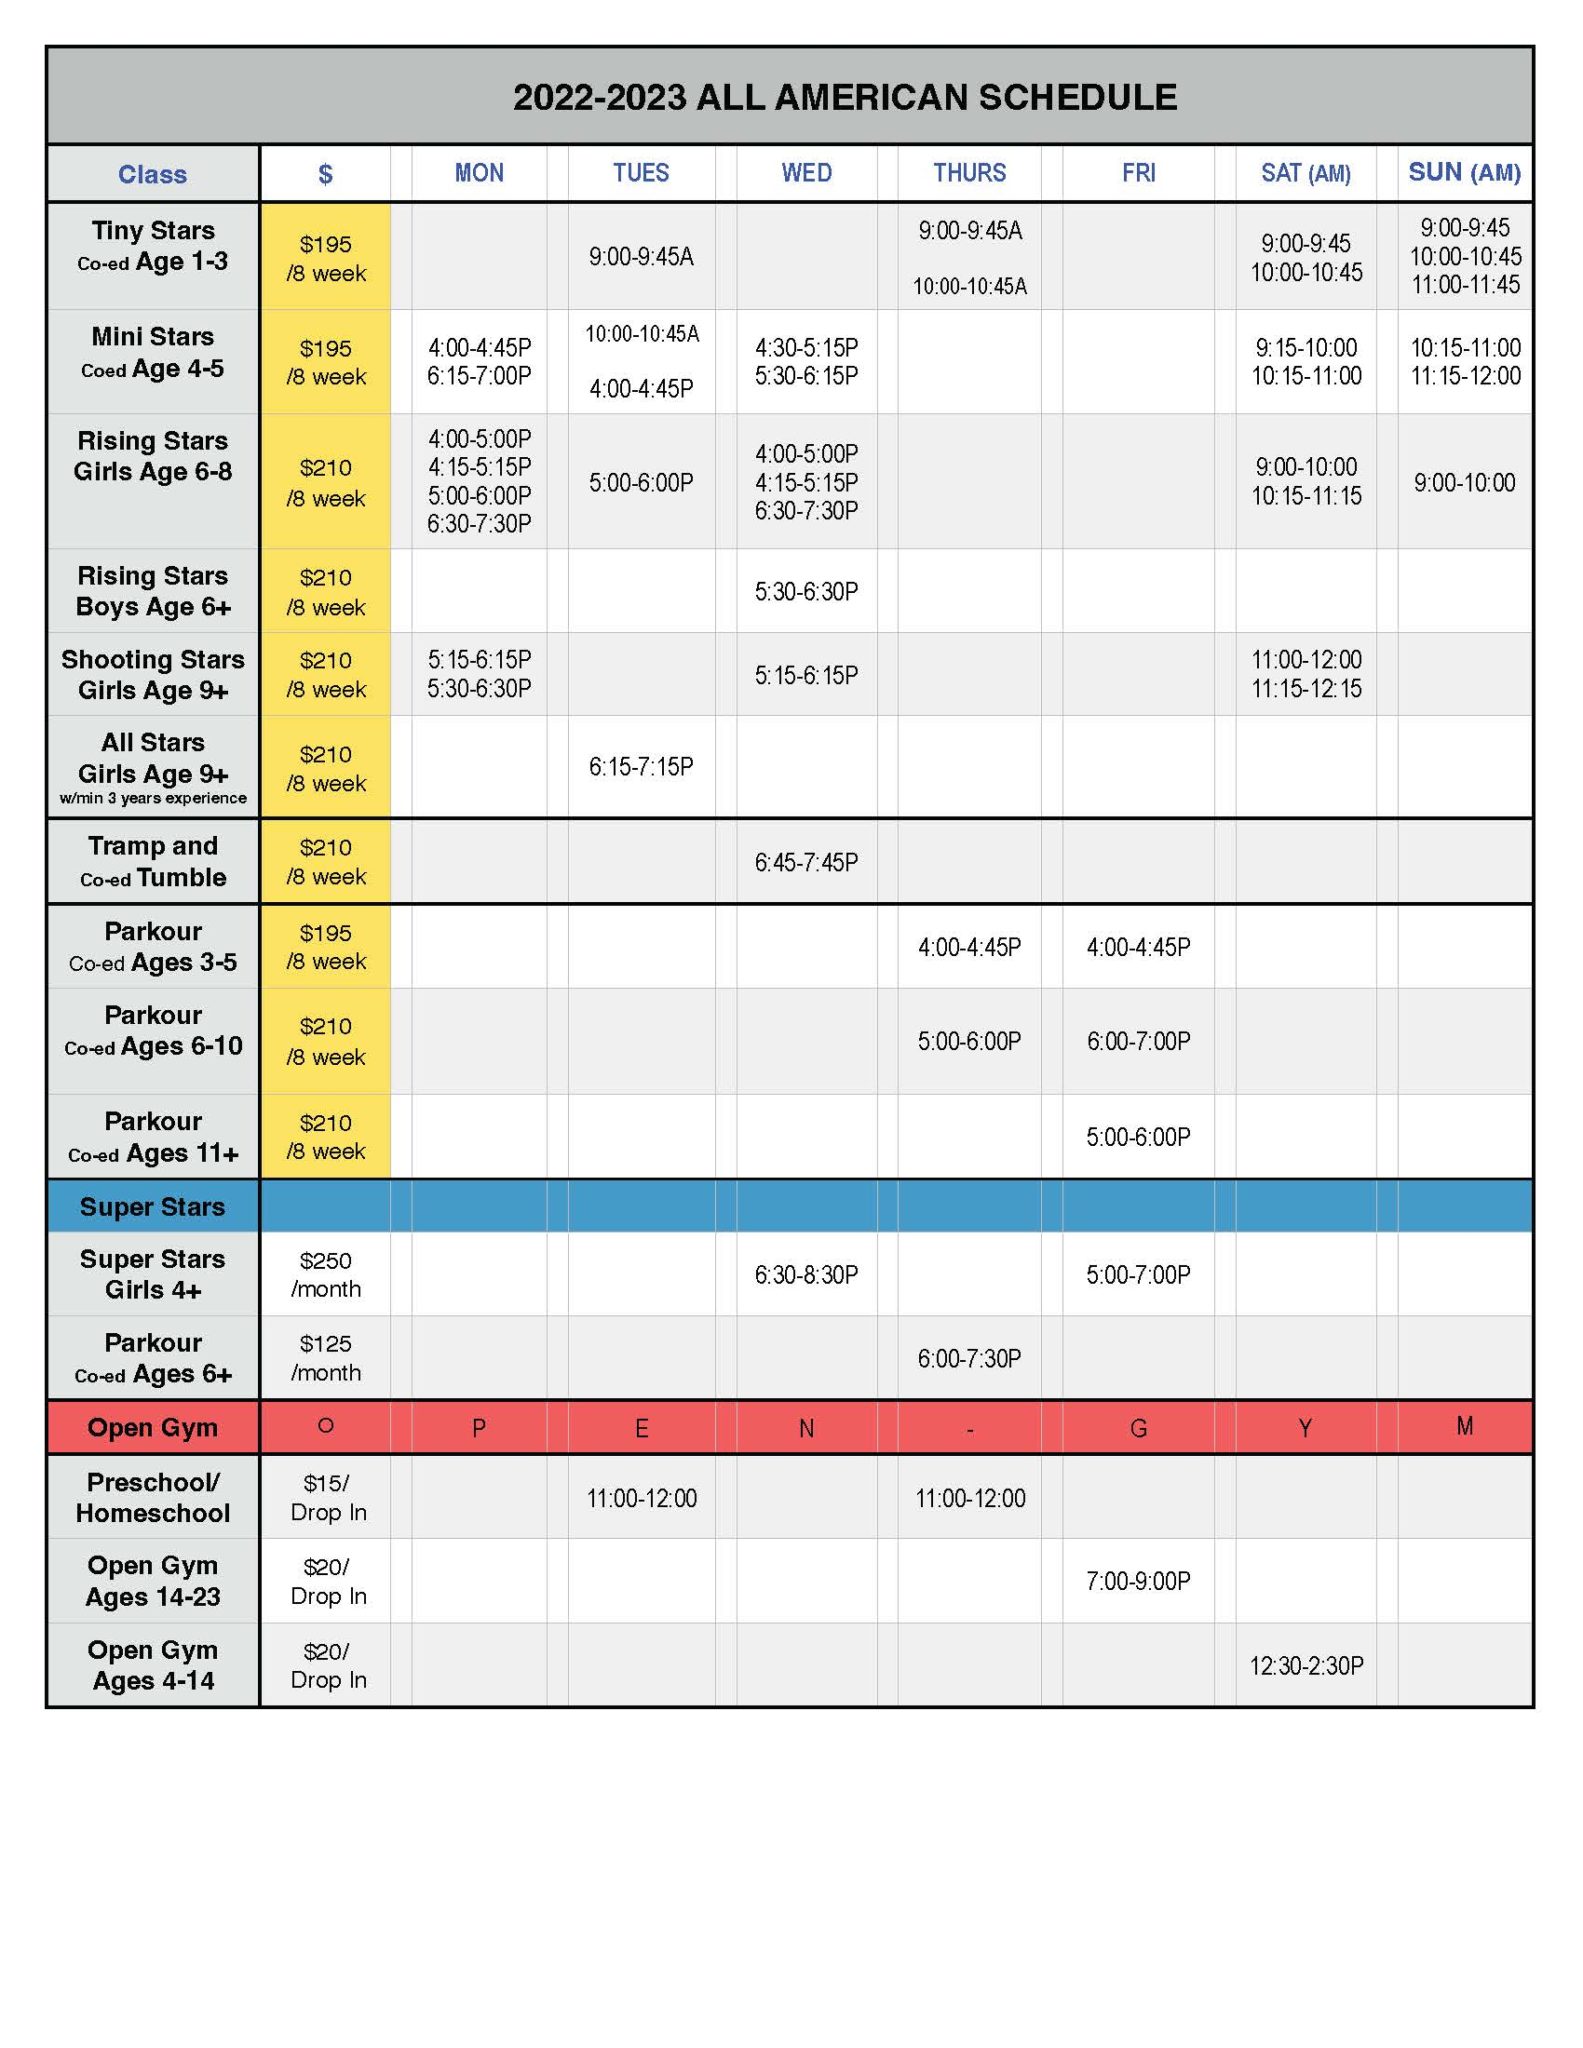 Recreational Schedule - All American Gymnastic & Dance Academy